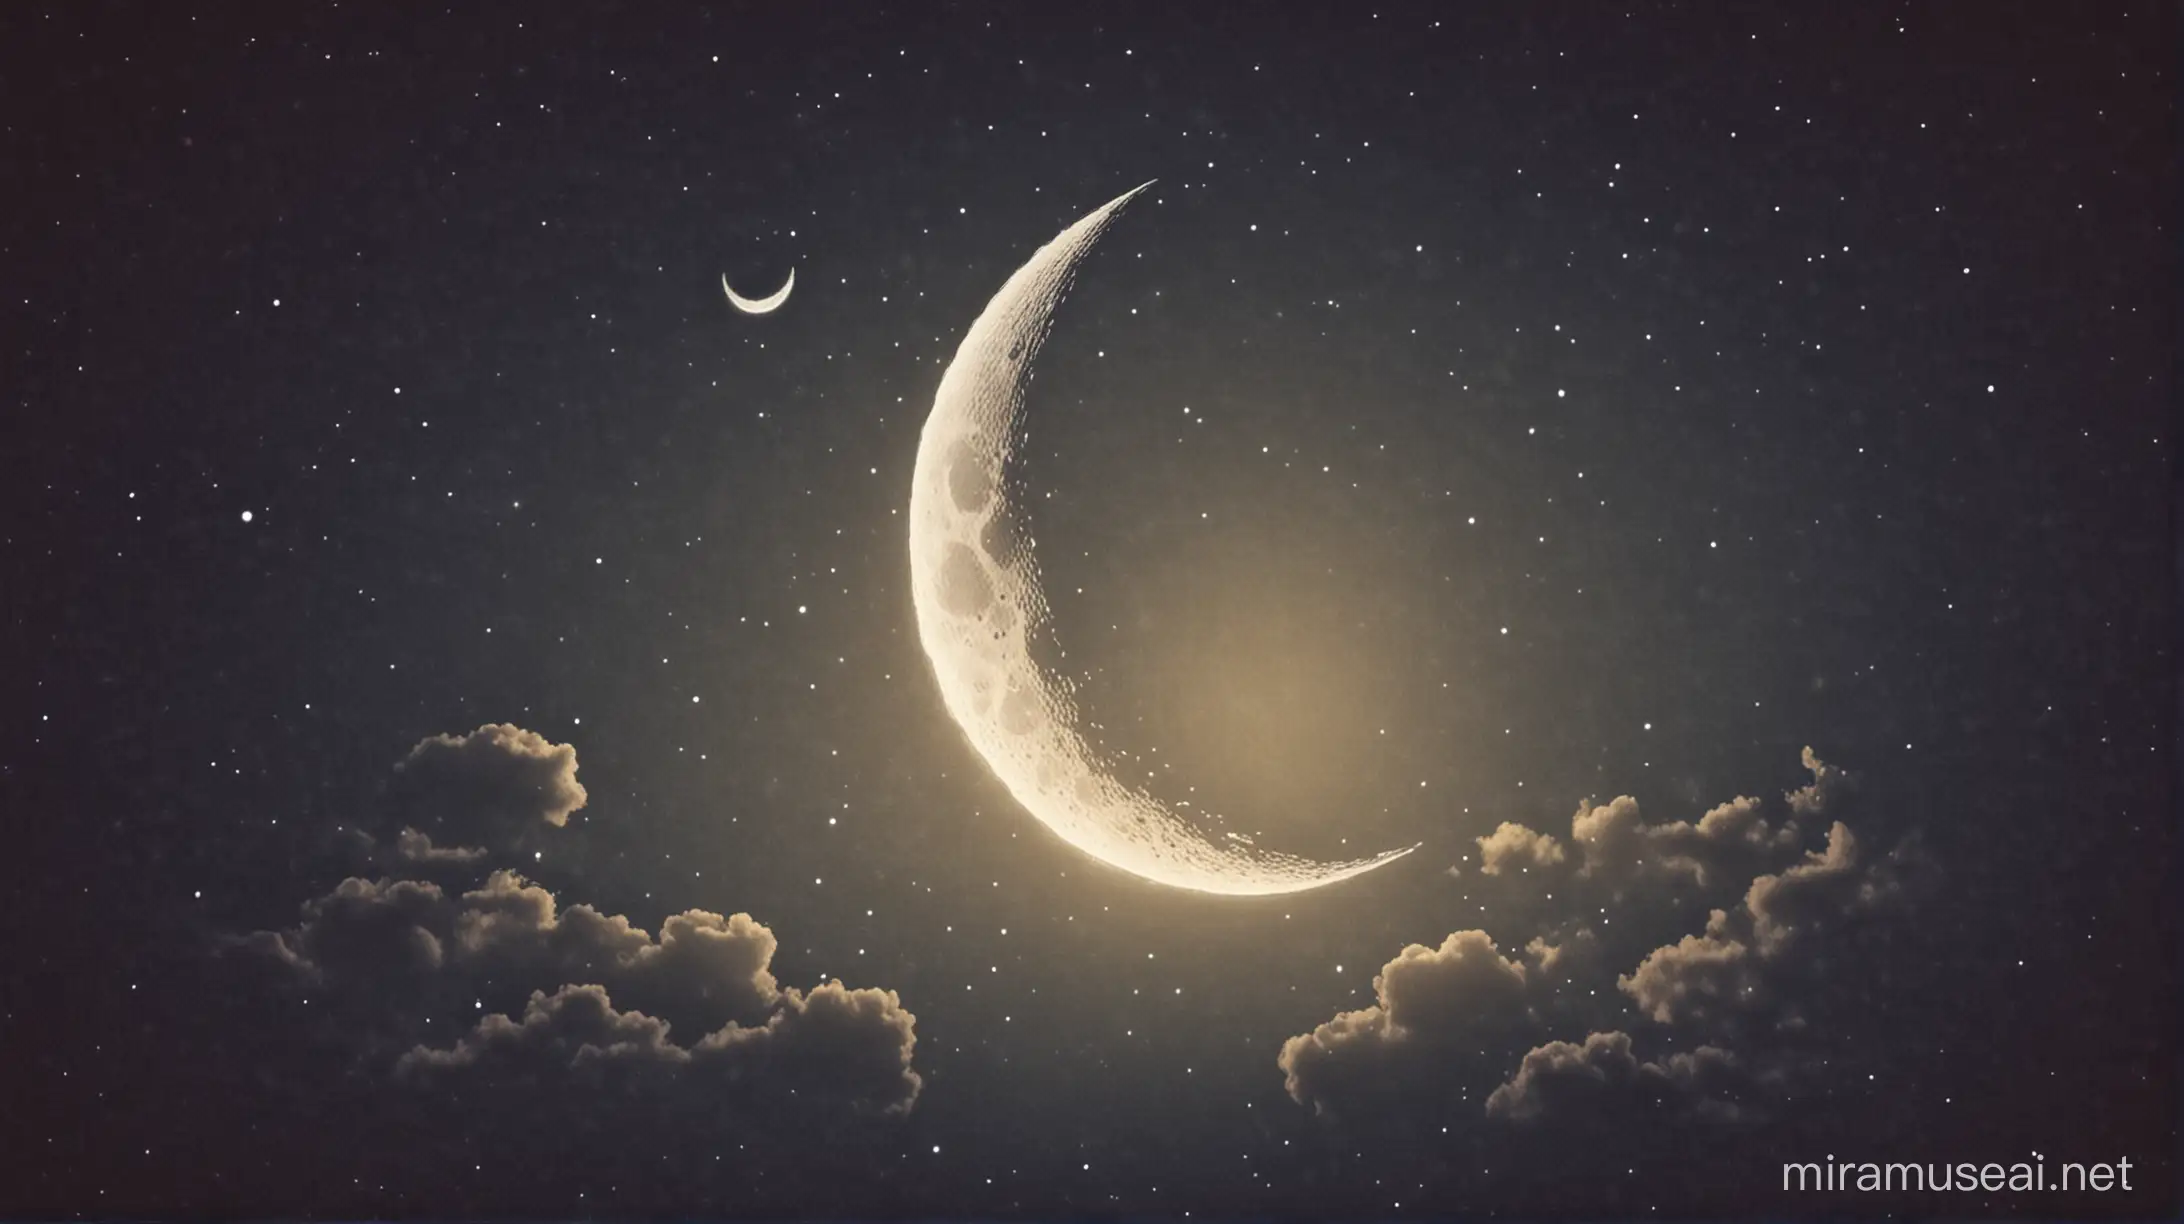 Create a beautiful half moon illustration 

